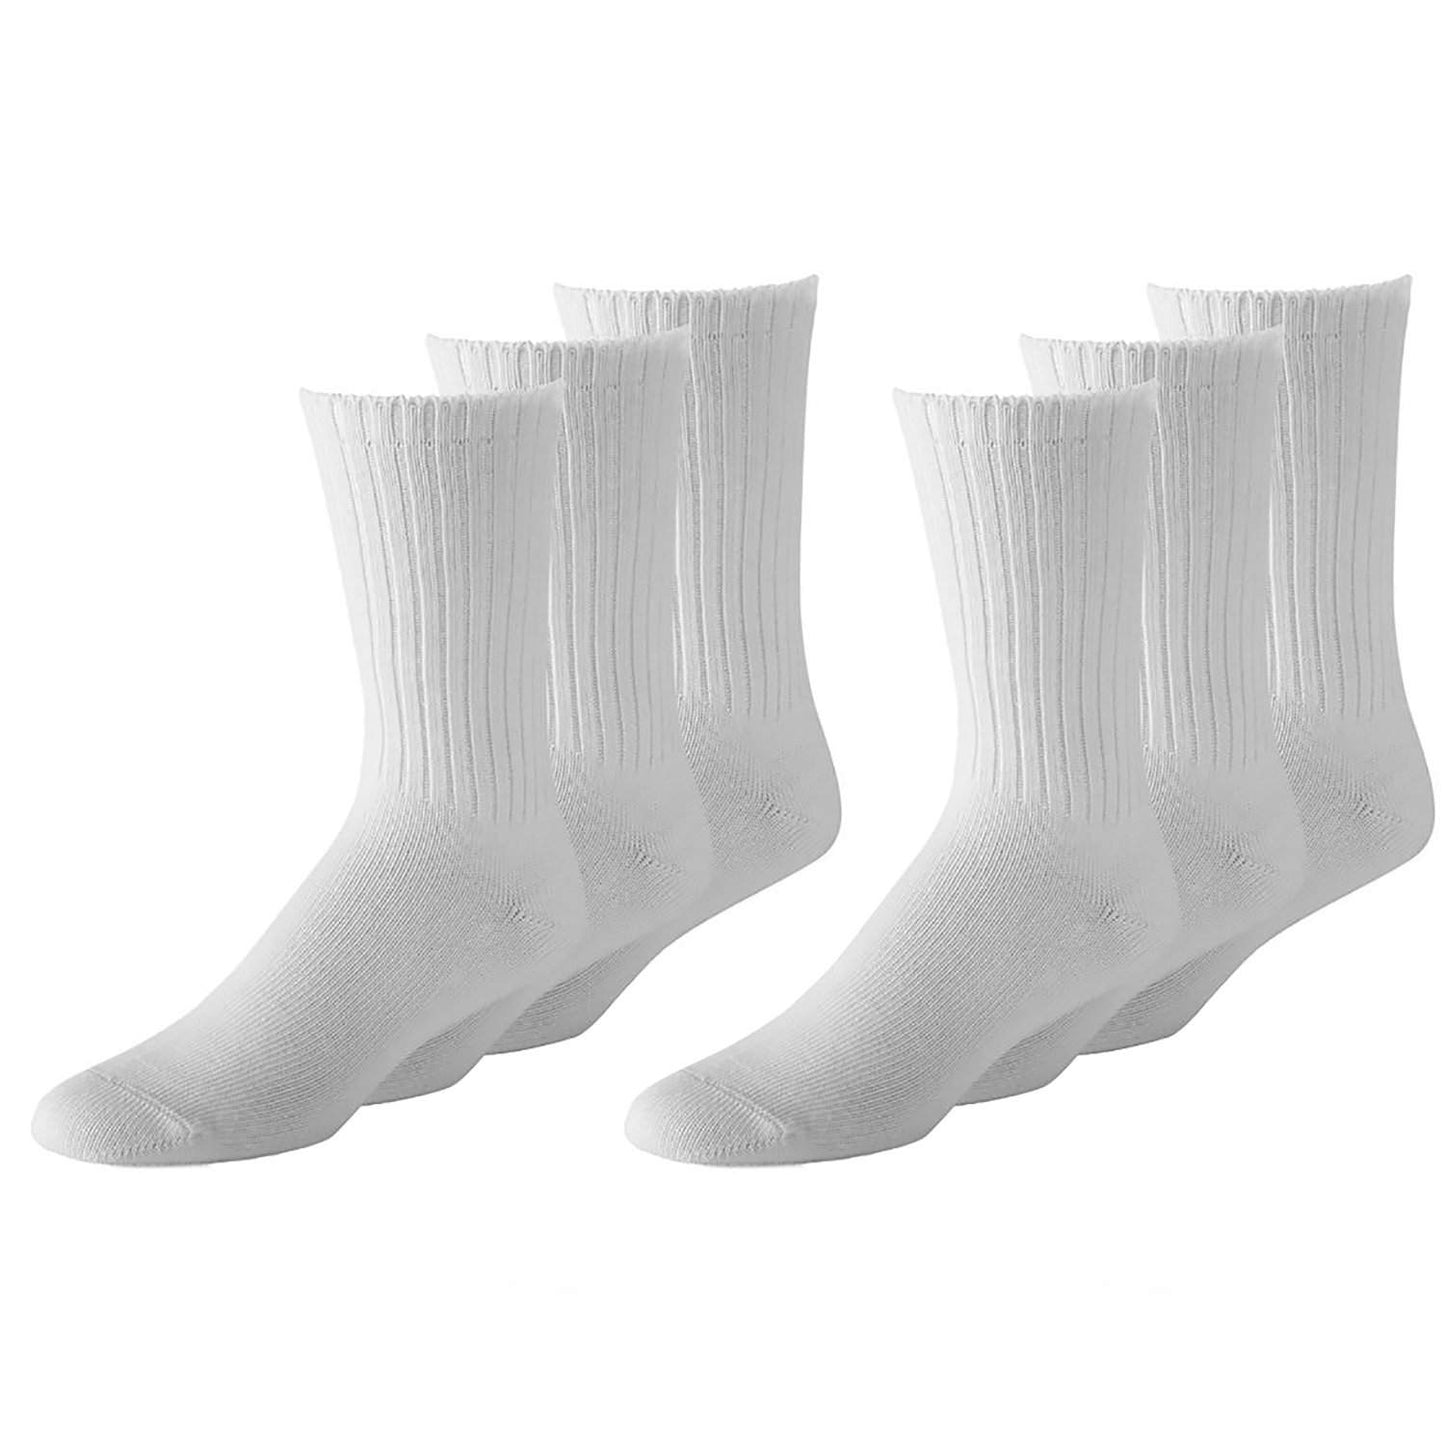 Unisex Crew Athletic Sports Cotton Socks  12 Pack